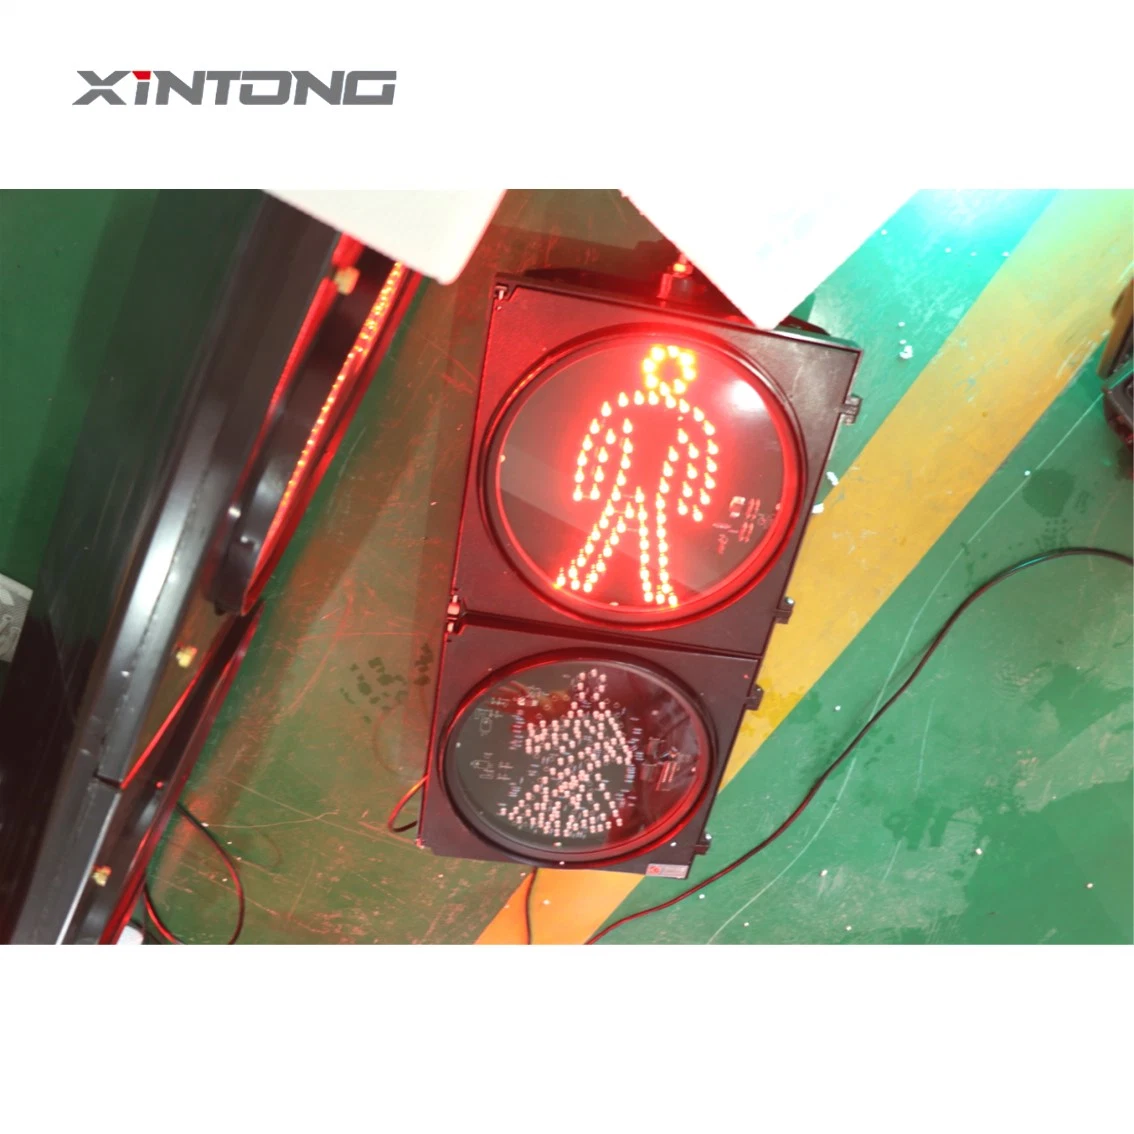 Xintong Portable High Speed Port Traffic Light Controller